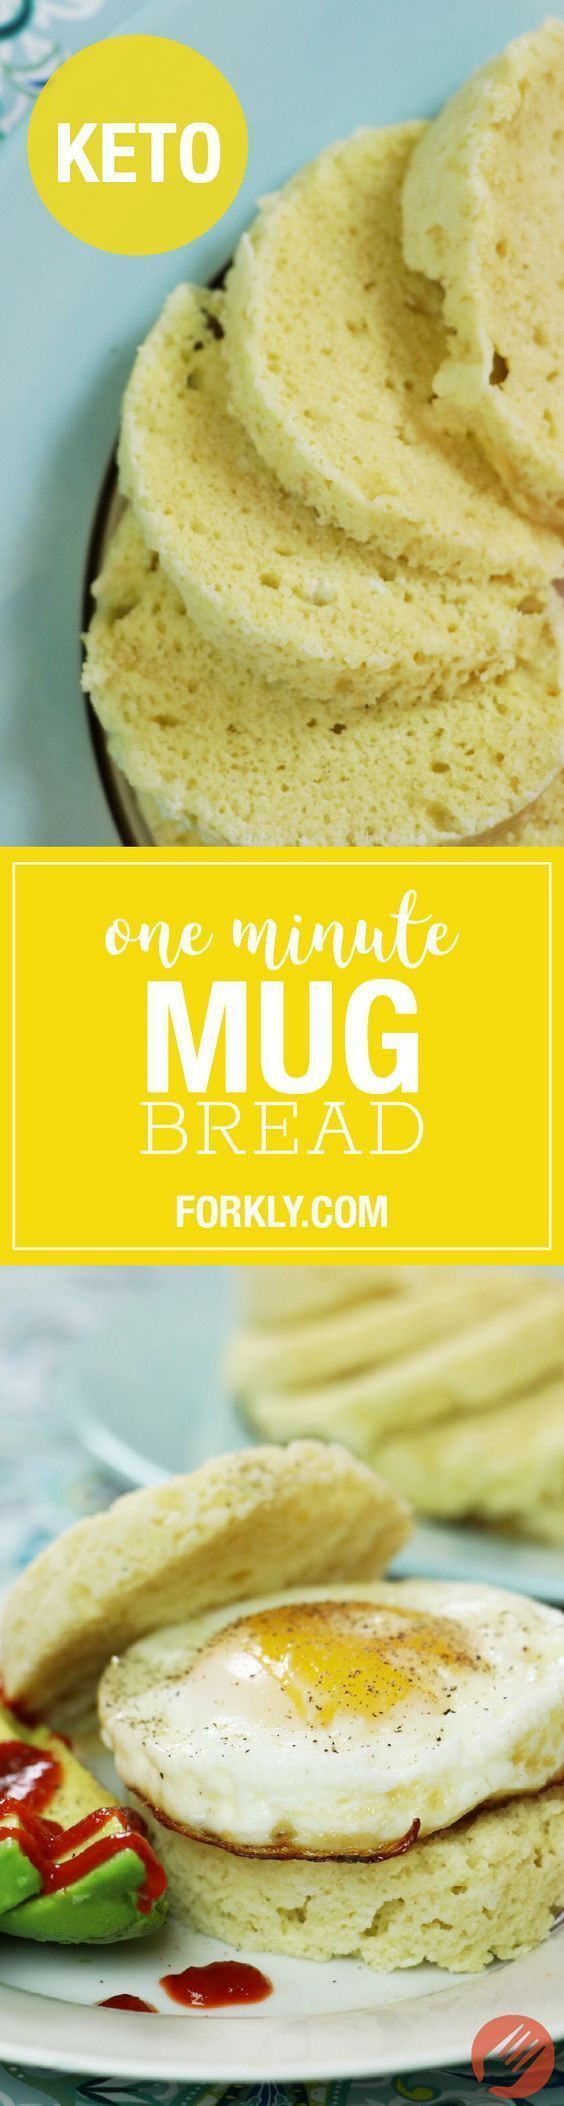 Keto Cloud Bread Microwave
 e Minute Keto Mug Bread With images